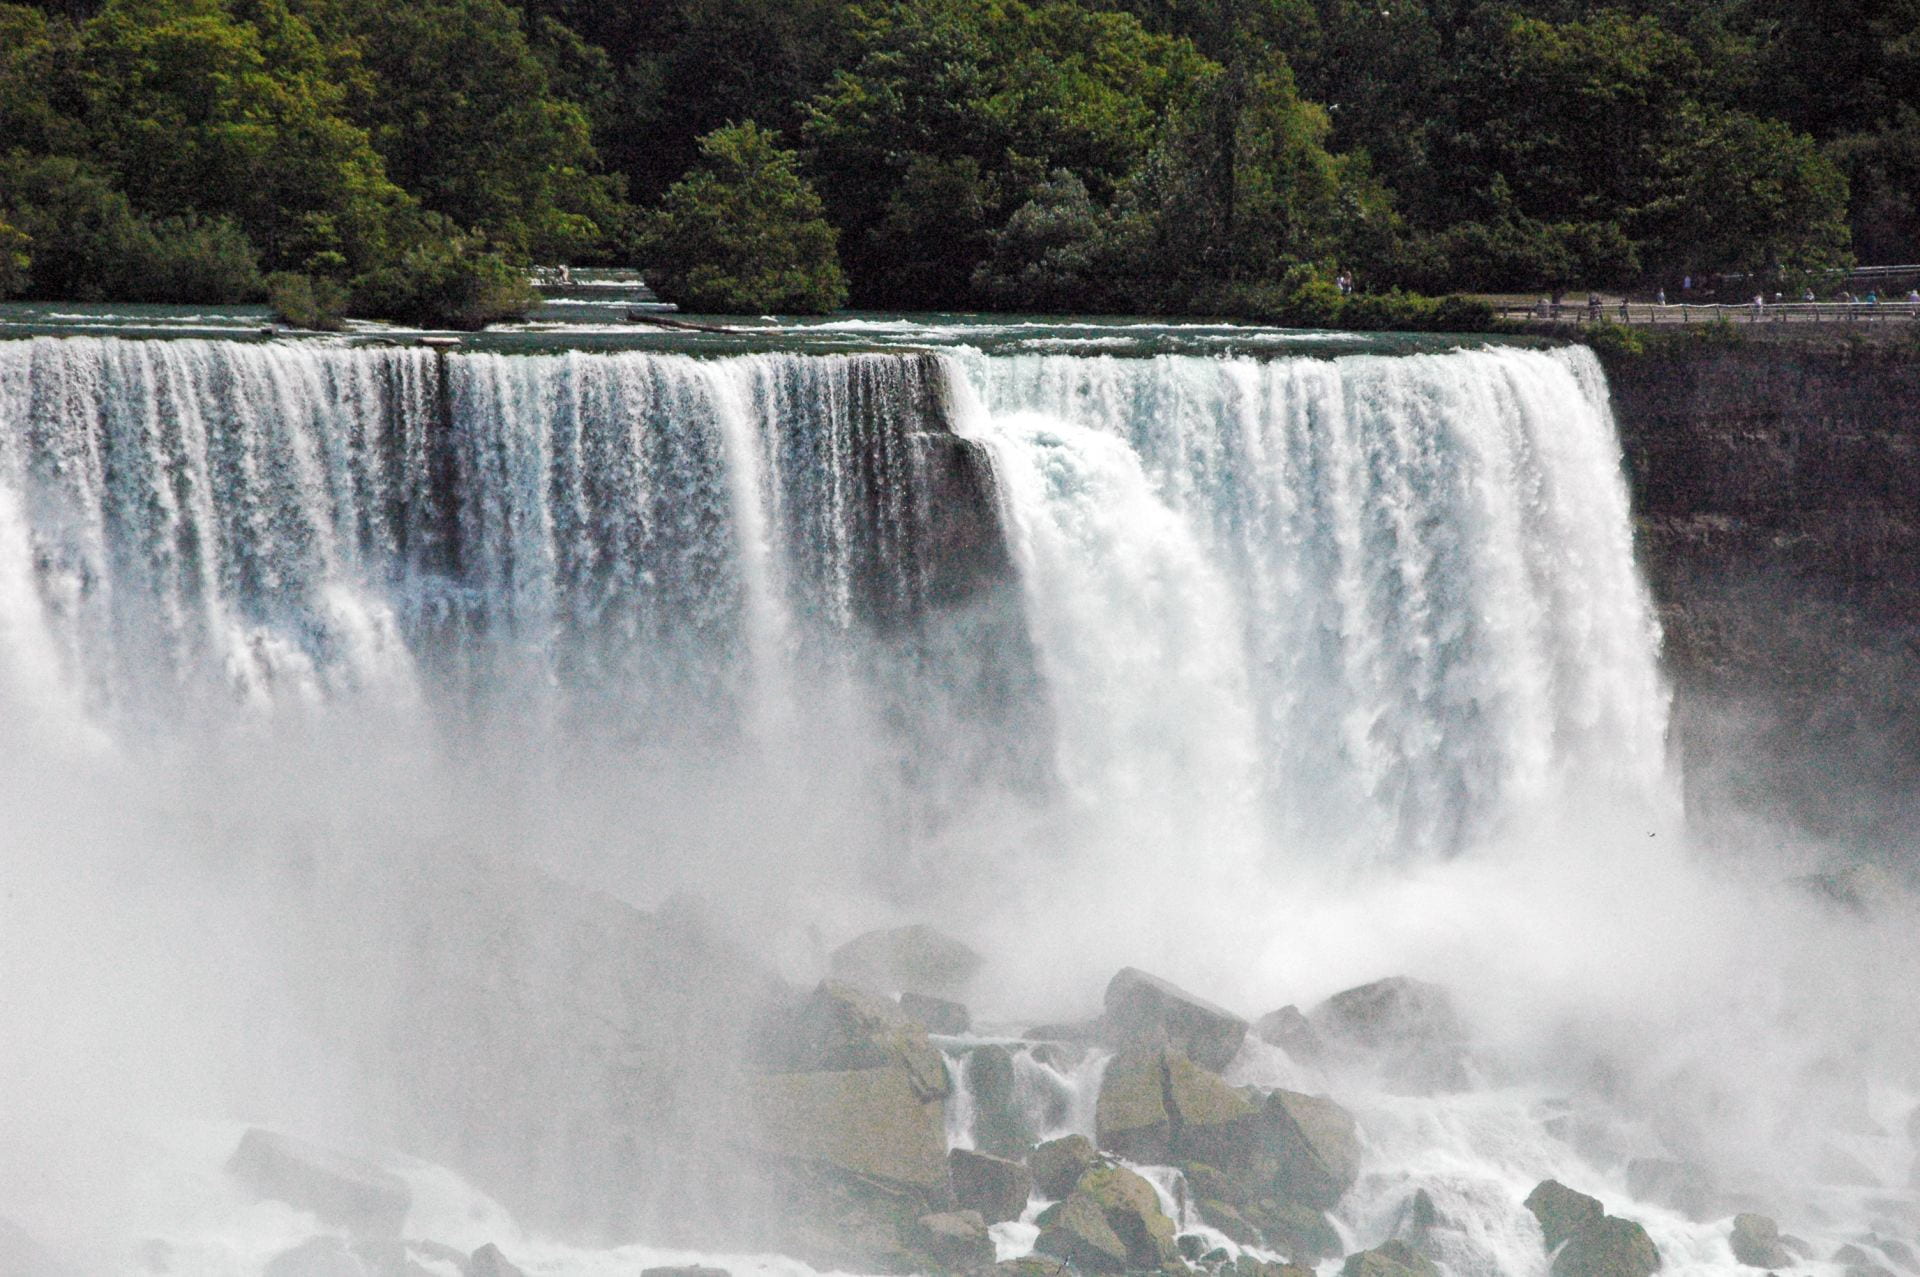 Niagara Falls occurs where the Niagara River flows over a cap rock of Lockport Dolostone.